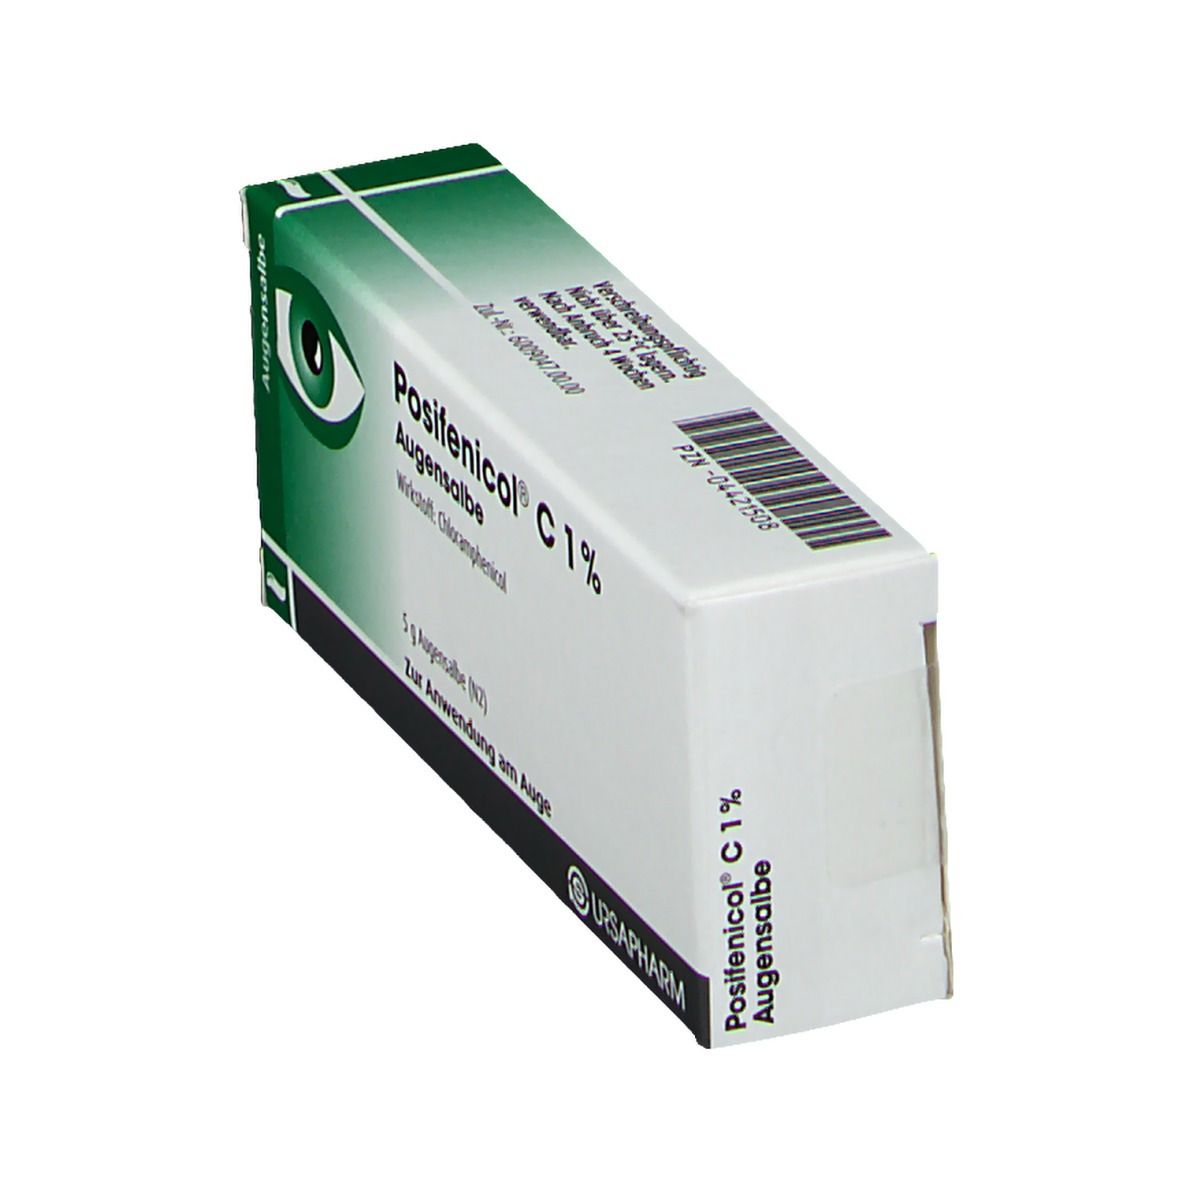 Posifenicol® C 1% Augensalbe